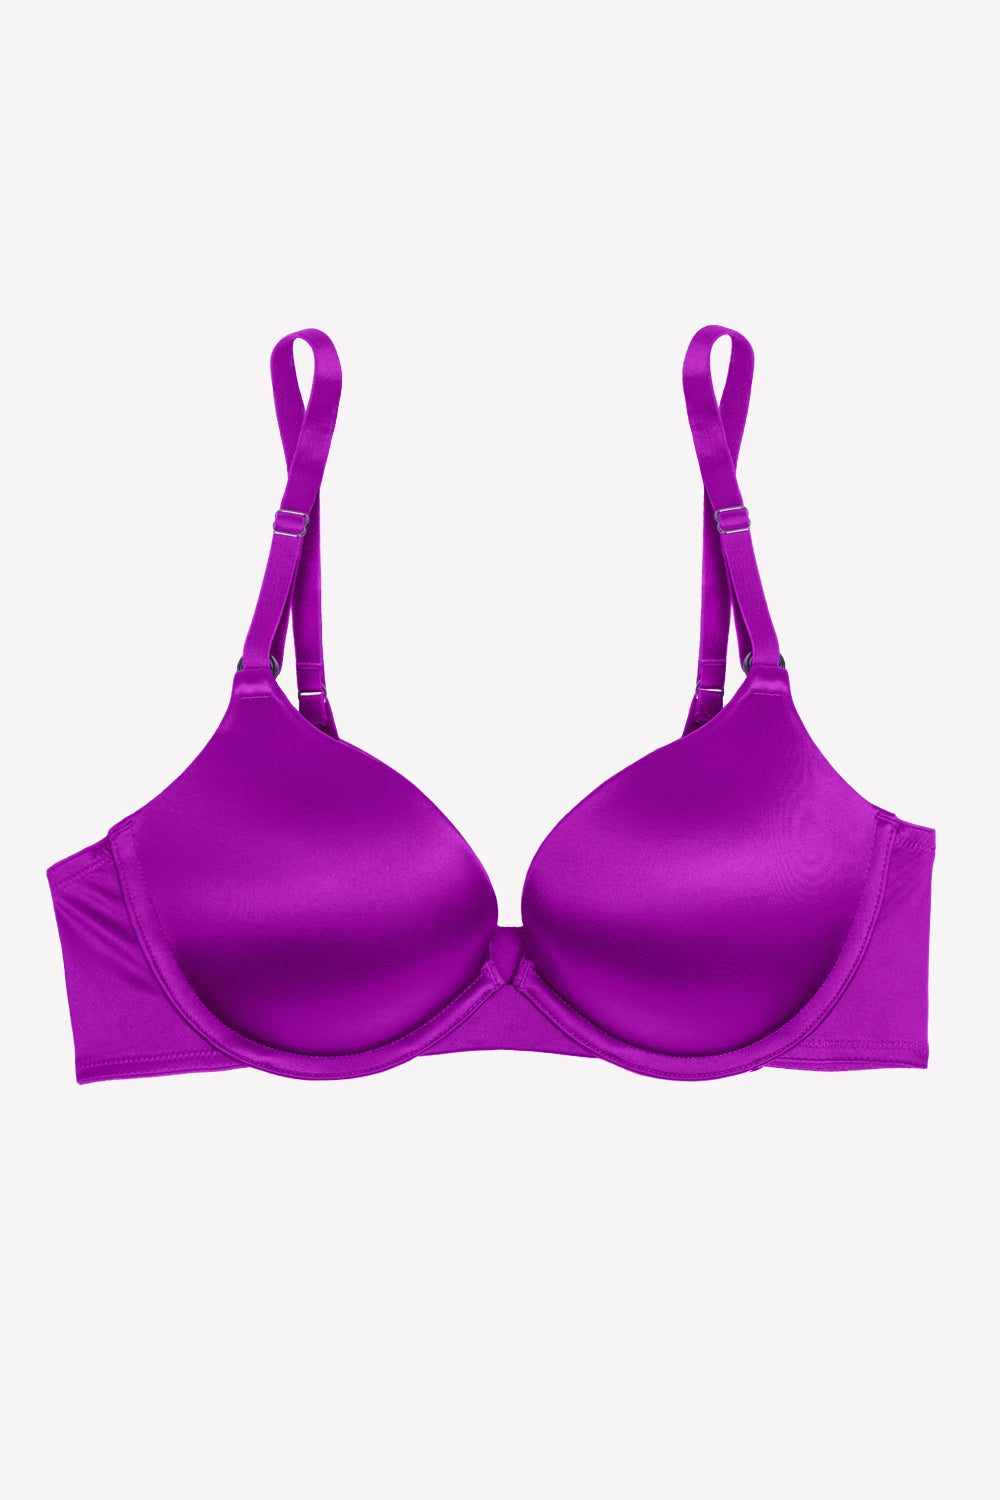 Buy PrettySecrets Women Push-up Heavily Padded Bra(Purple) on